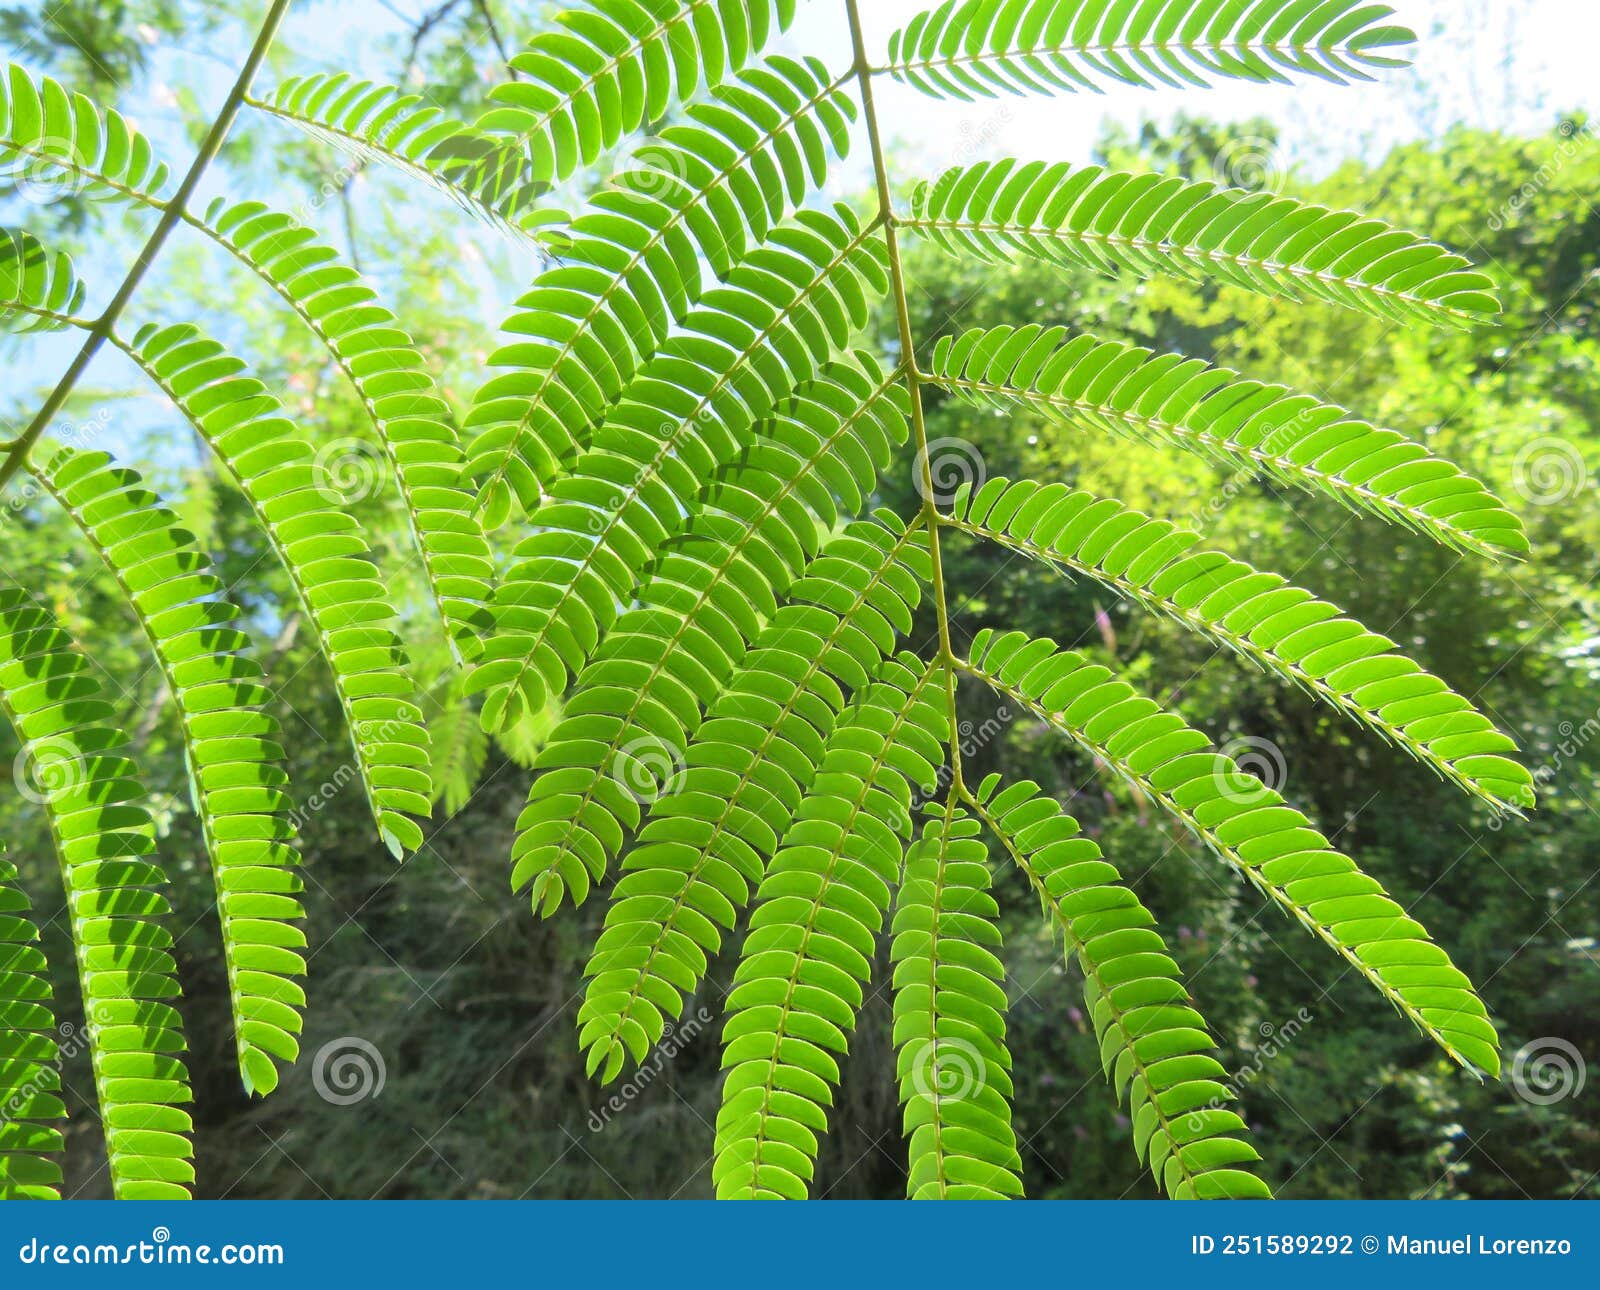 beautiful fern plant provide natural green shade